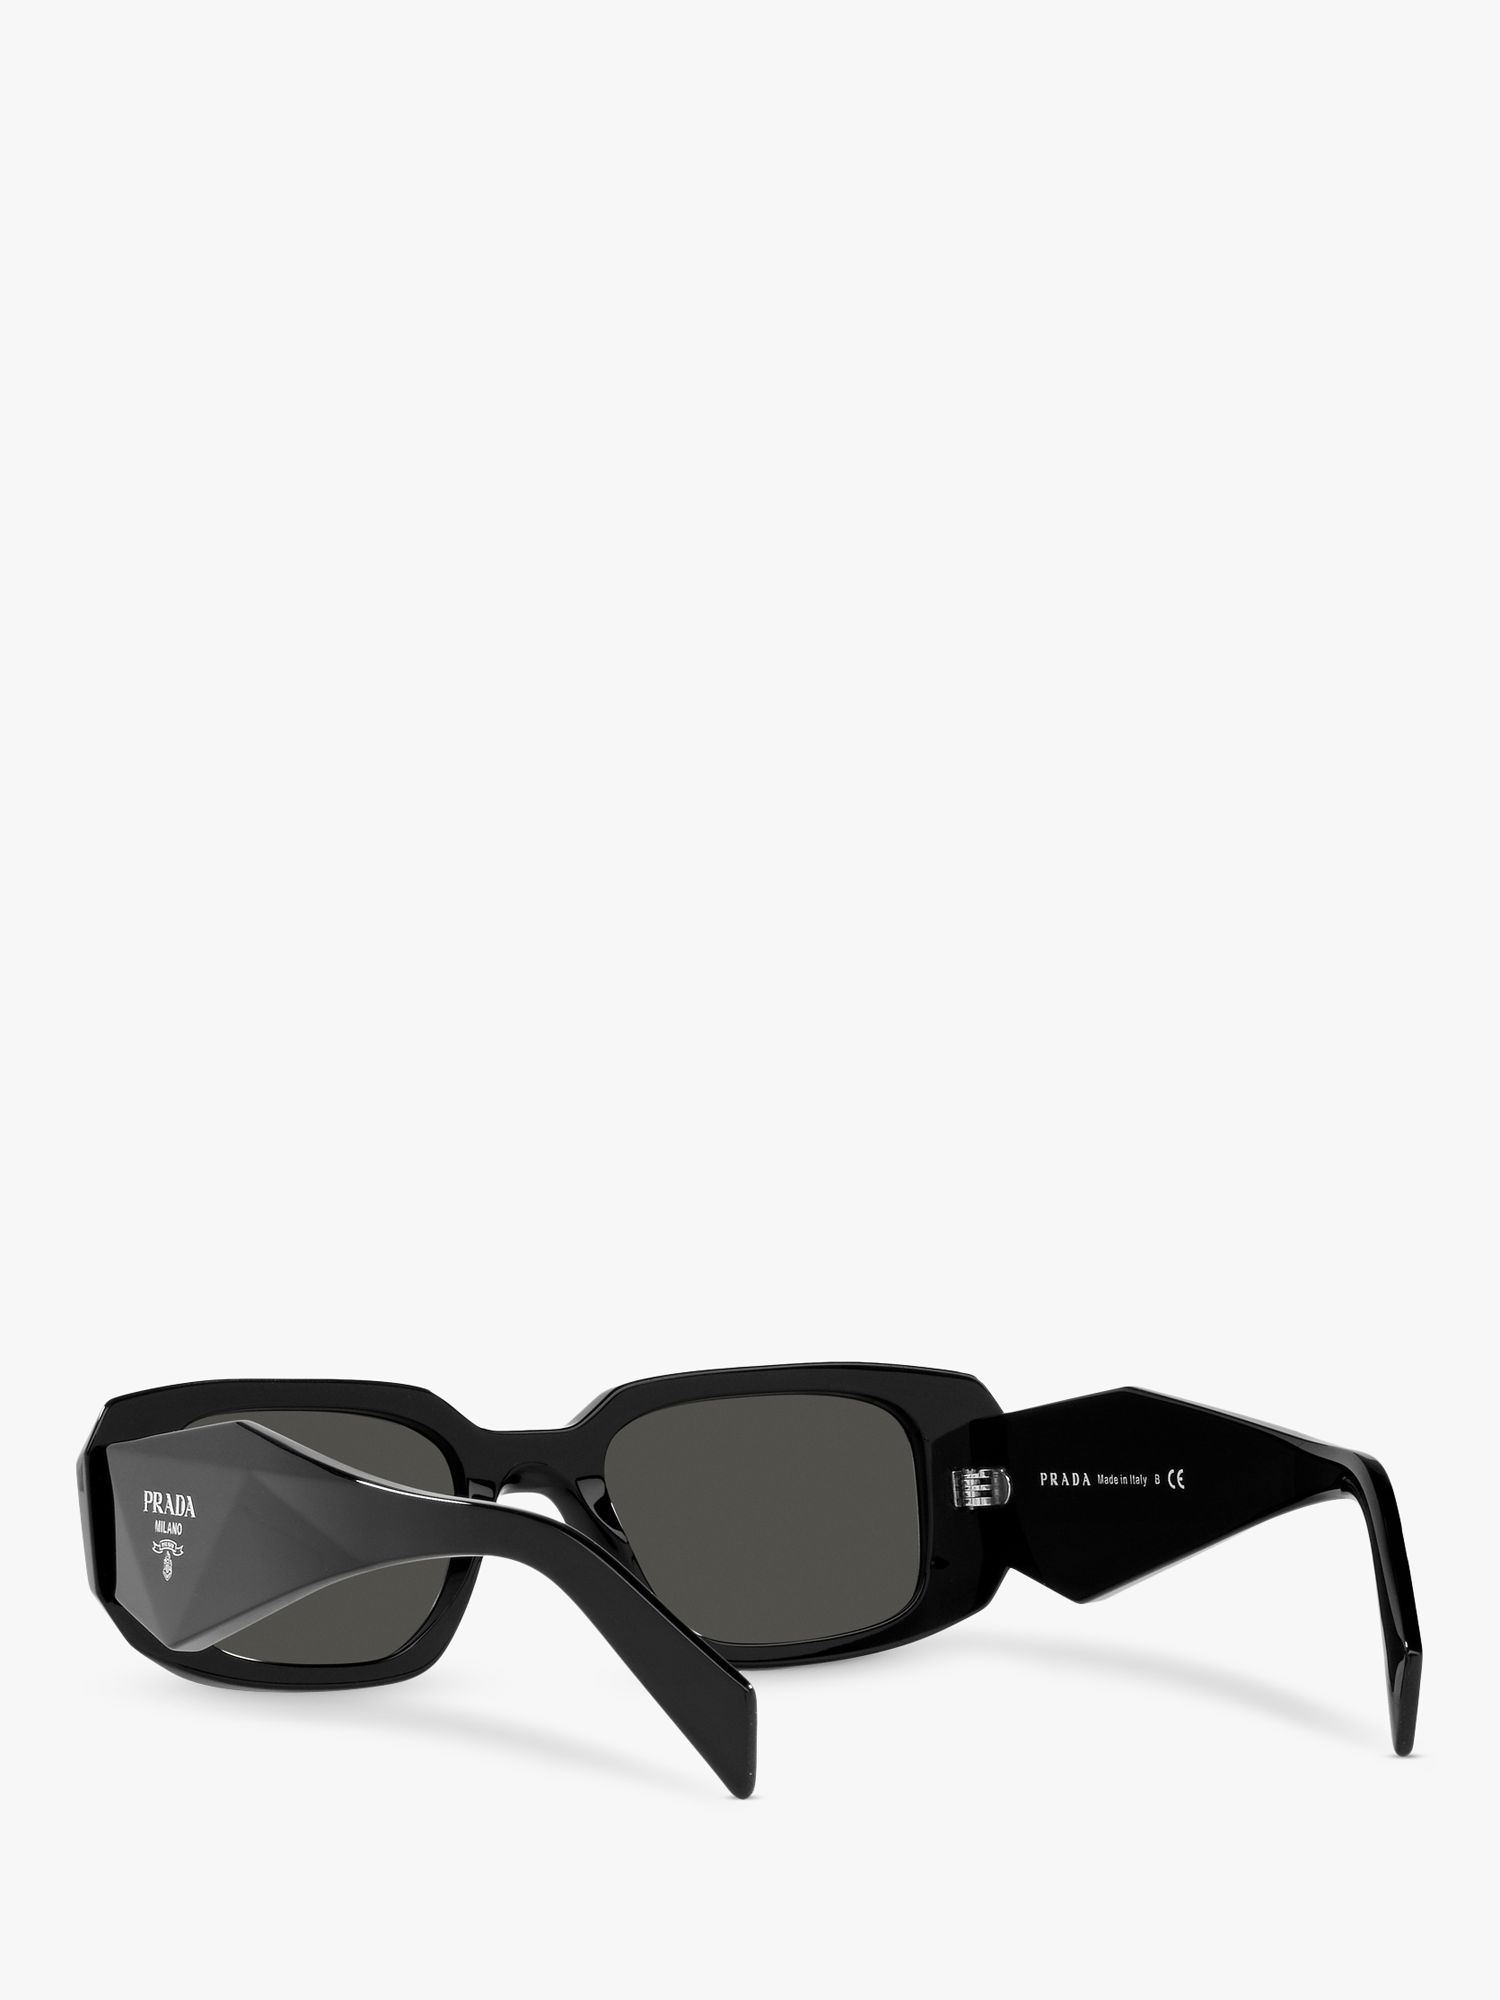 Prada Pr 17ws Women S Square Sunglasses Black At John Lewis And Partners